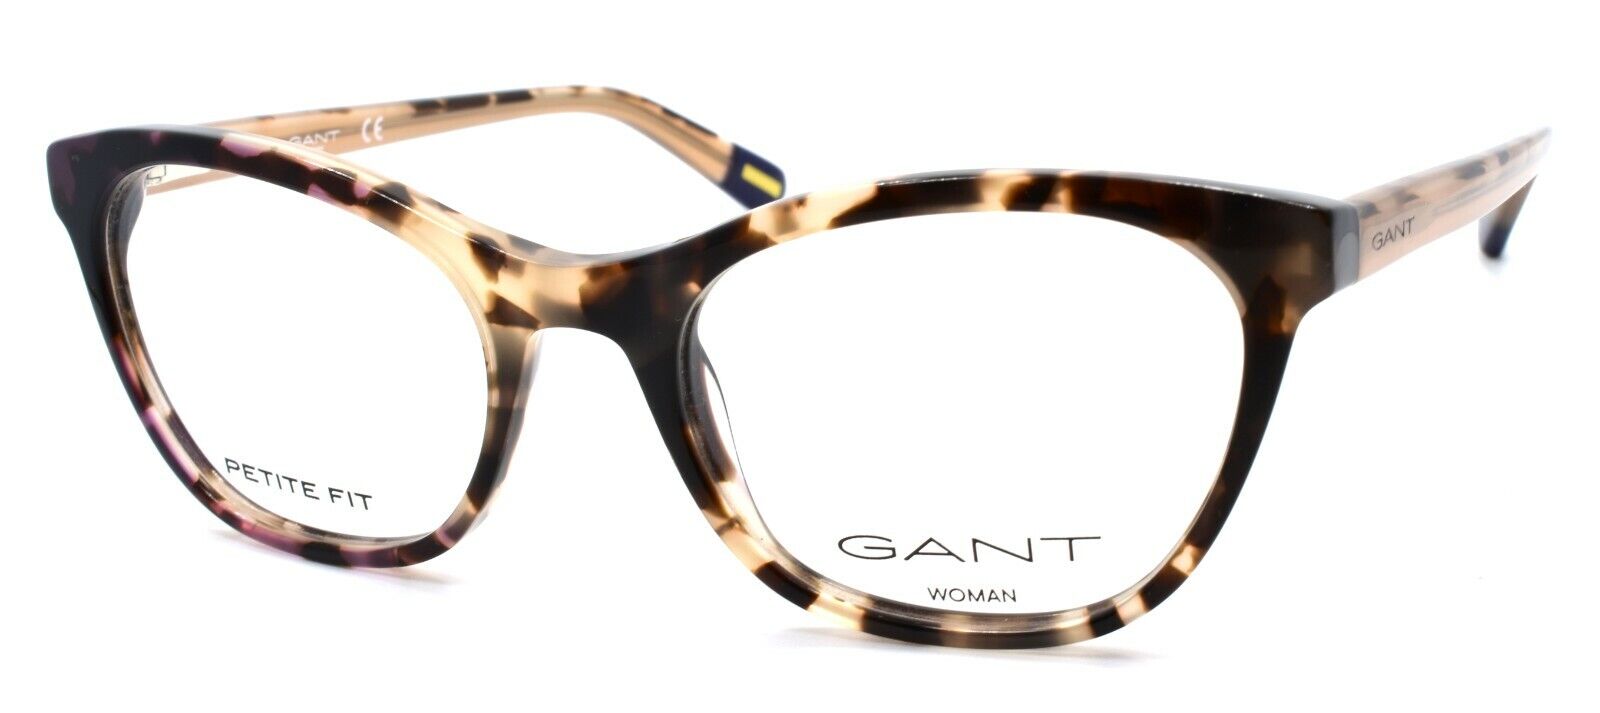 1-GANT GA4084 055 Women's Eyeglasses Frames Cat Eye Petite 50-18-140 Pink Havana-664689974634-IKSpecs